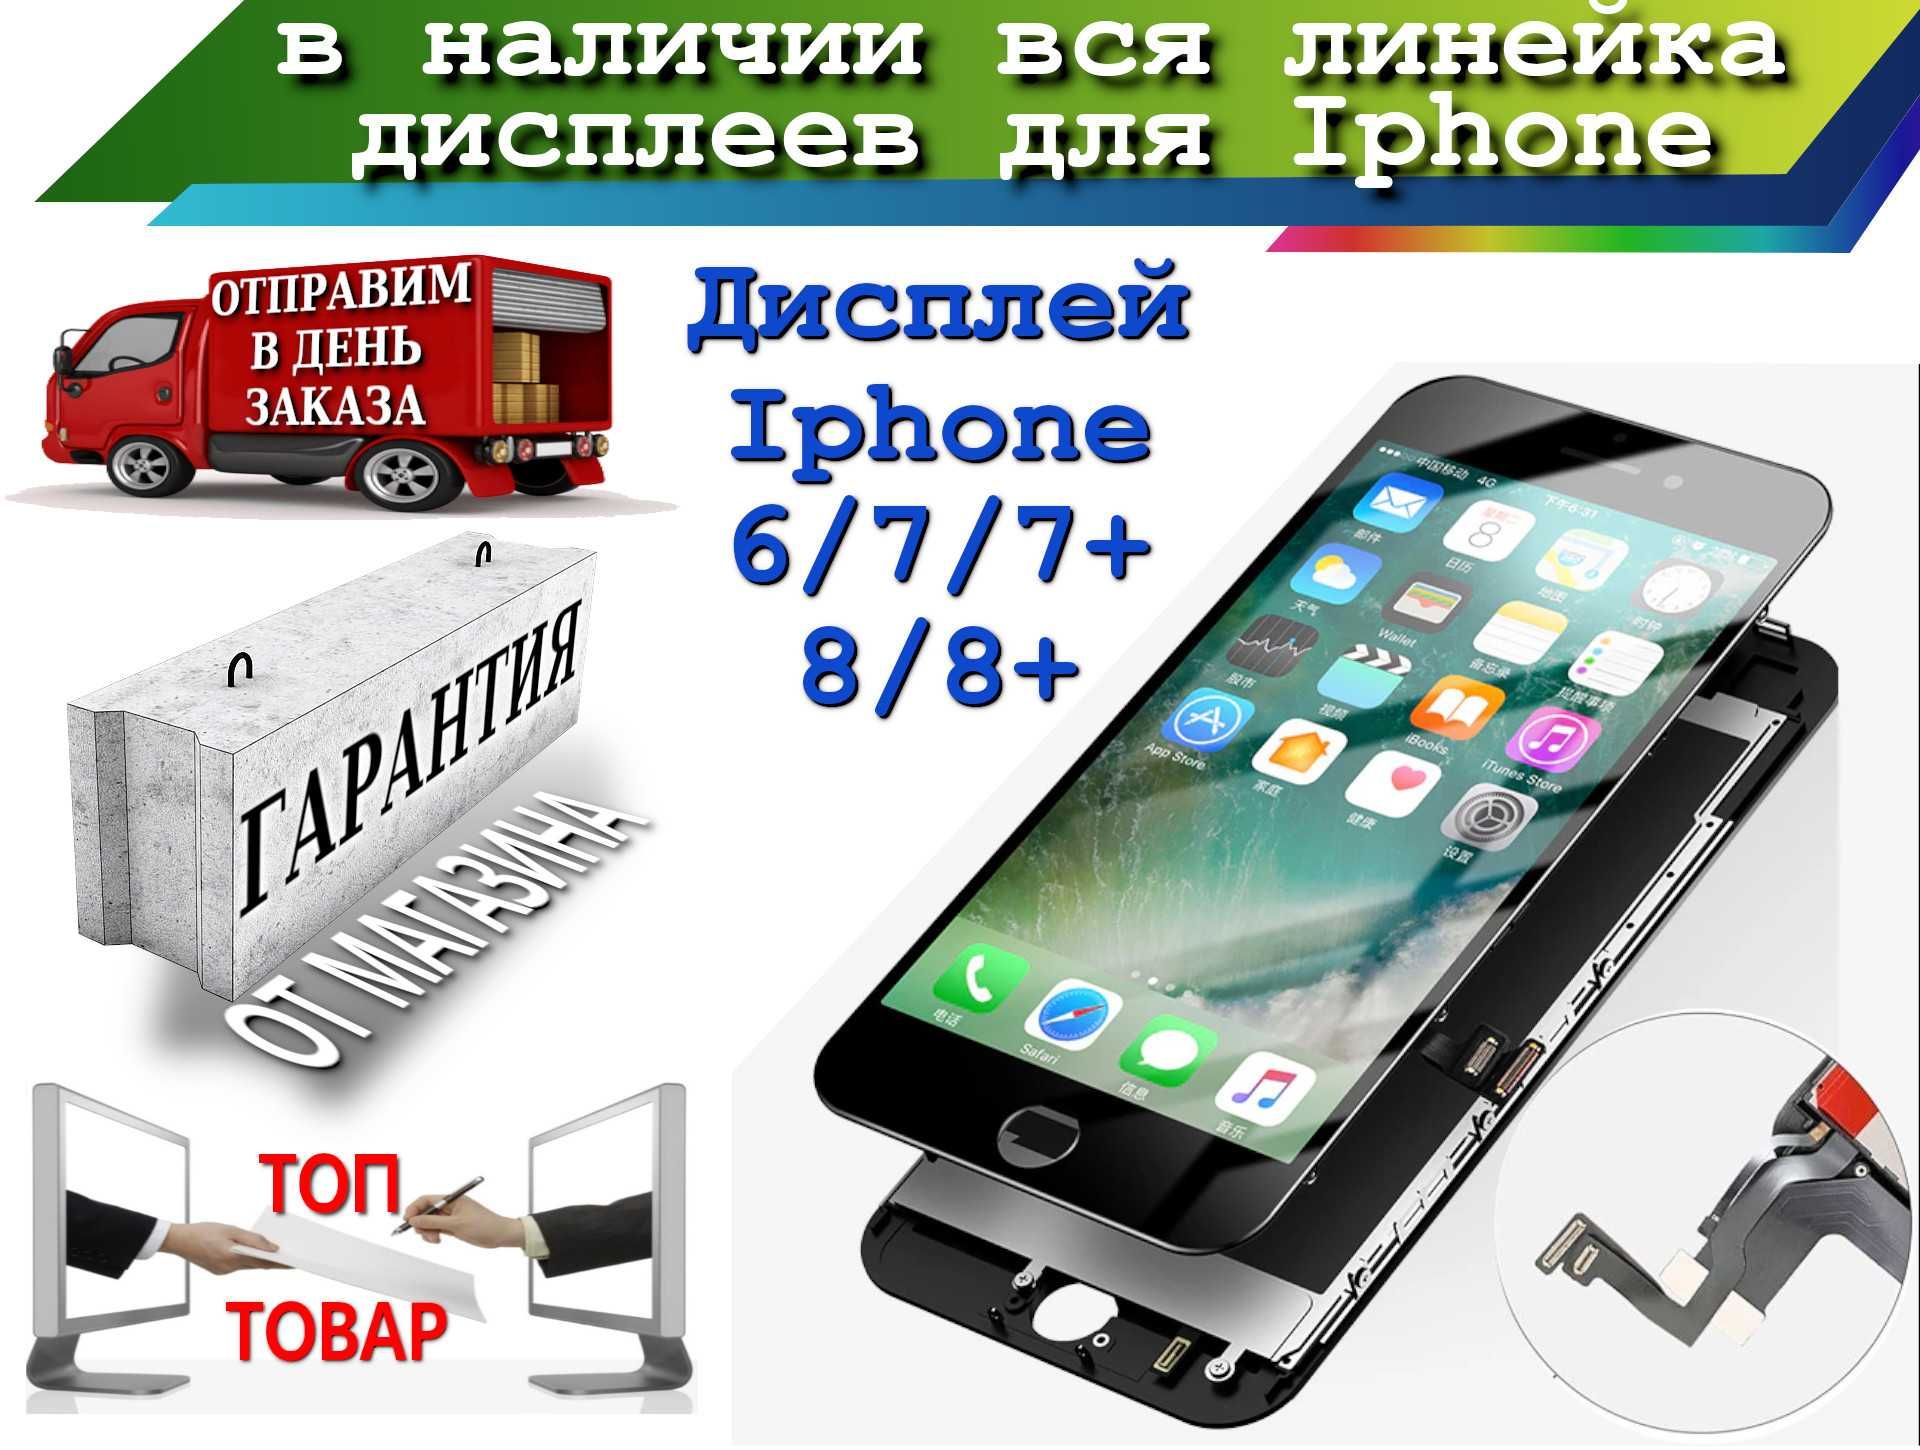 Дисплей iPhone 7 Plus производитель Tianma и др. запчасти для Айфон